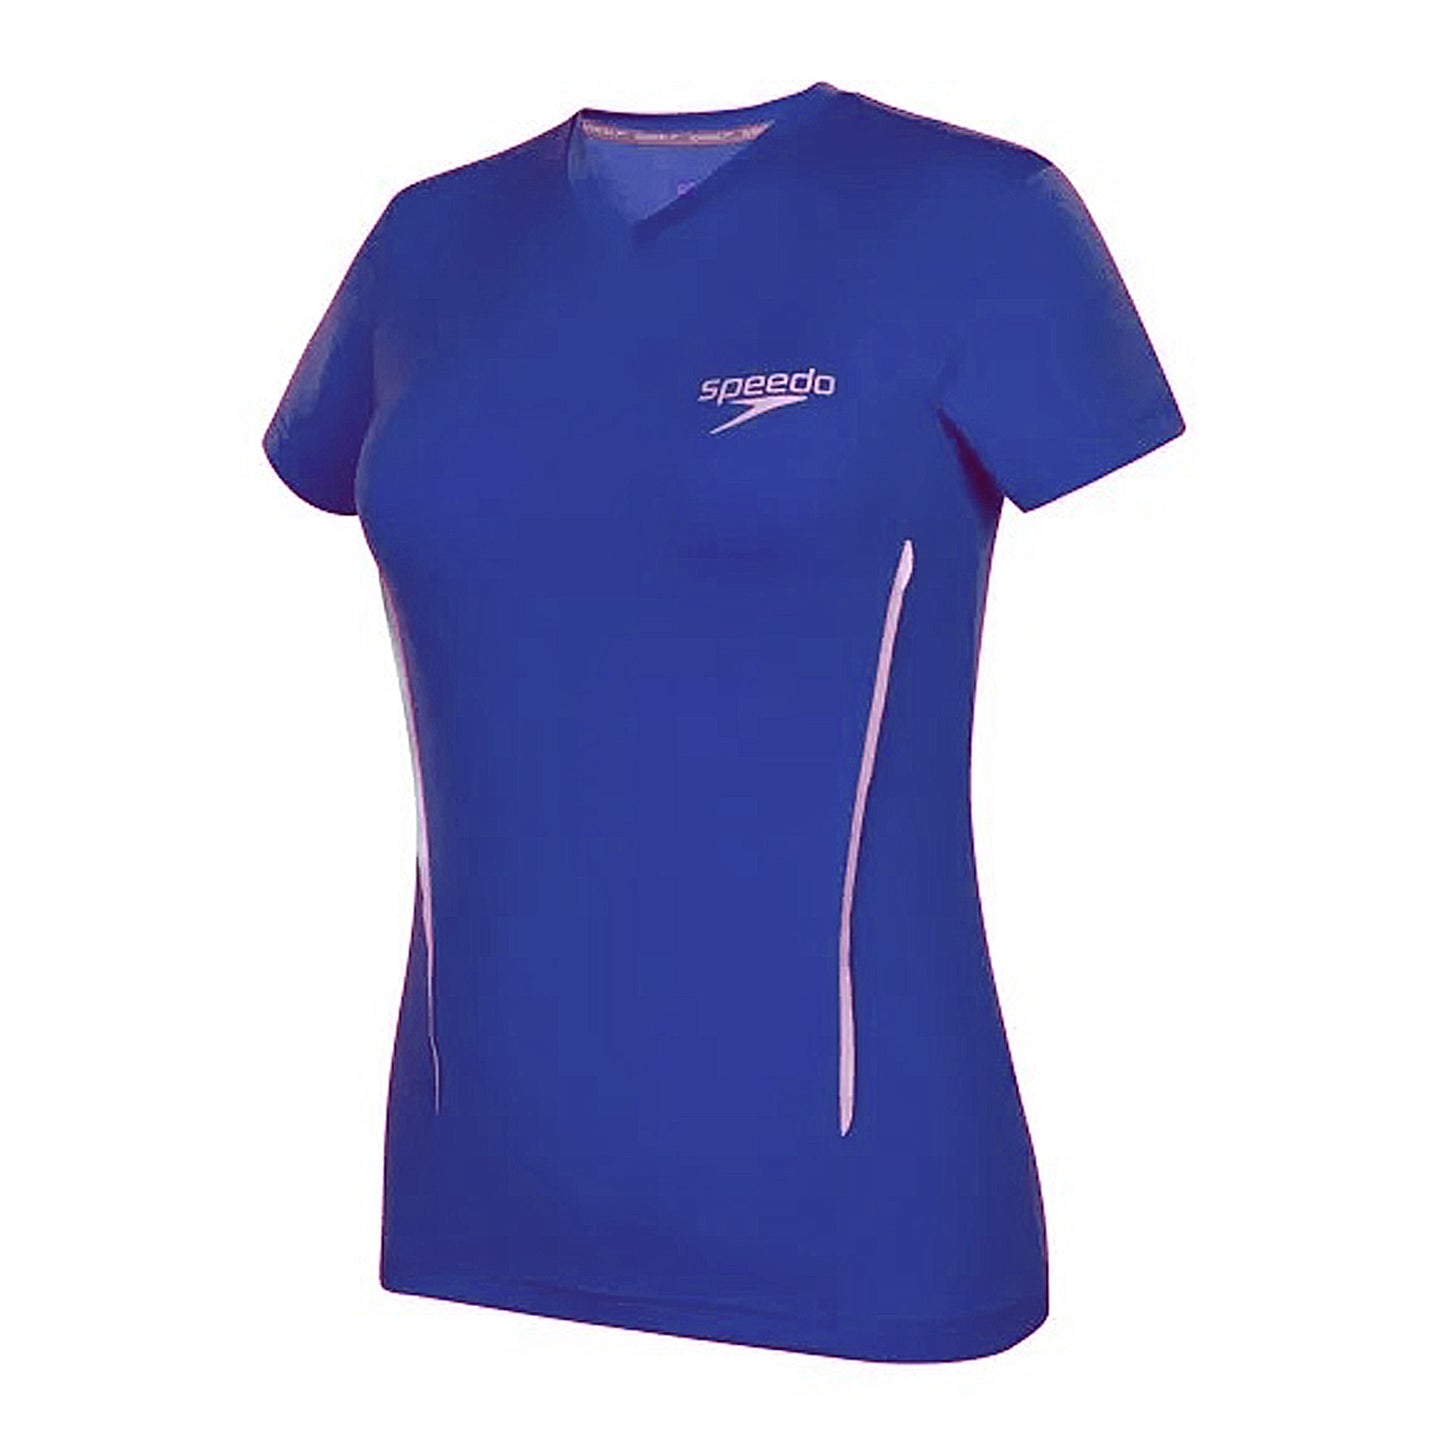 Speedo Short Sleeve Sun Top For Women (Ultramarine/Silver) - Best Price online Prokicksports.com